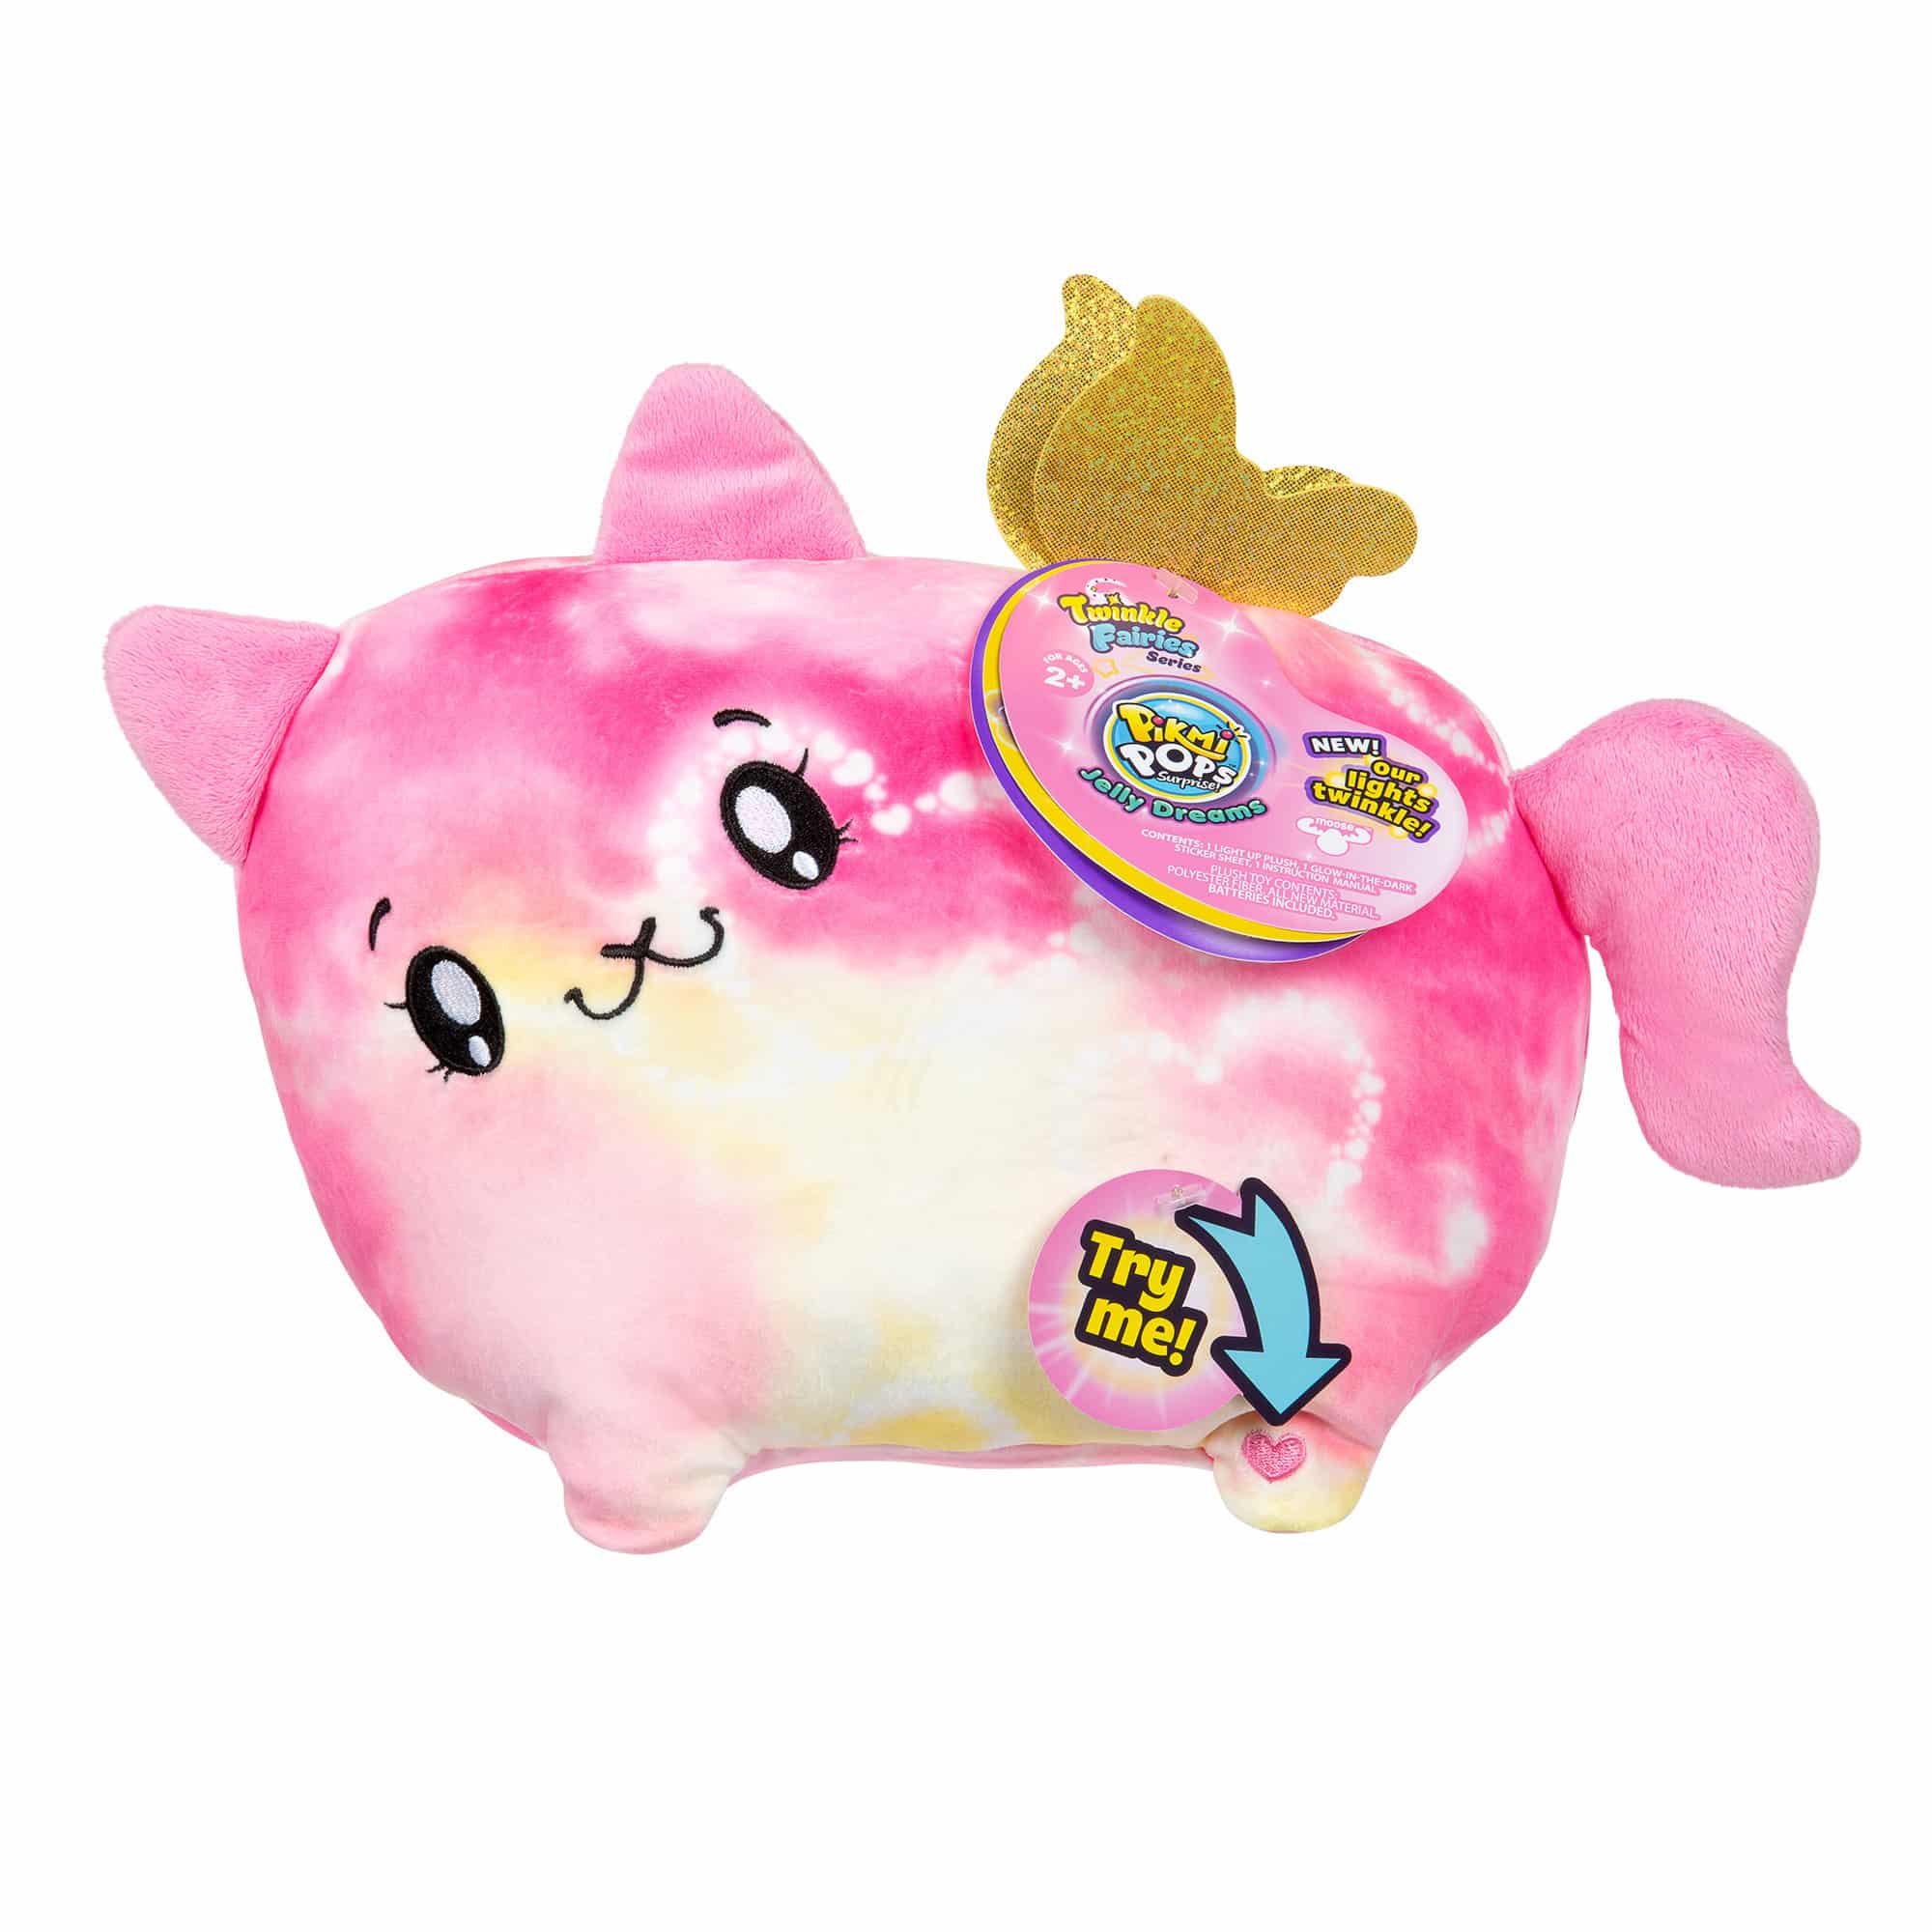 Pikmi Pops Surprise - Jelly Dreams Twinkle Fairies Assortment